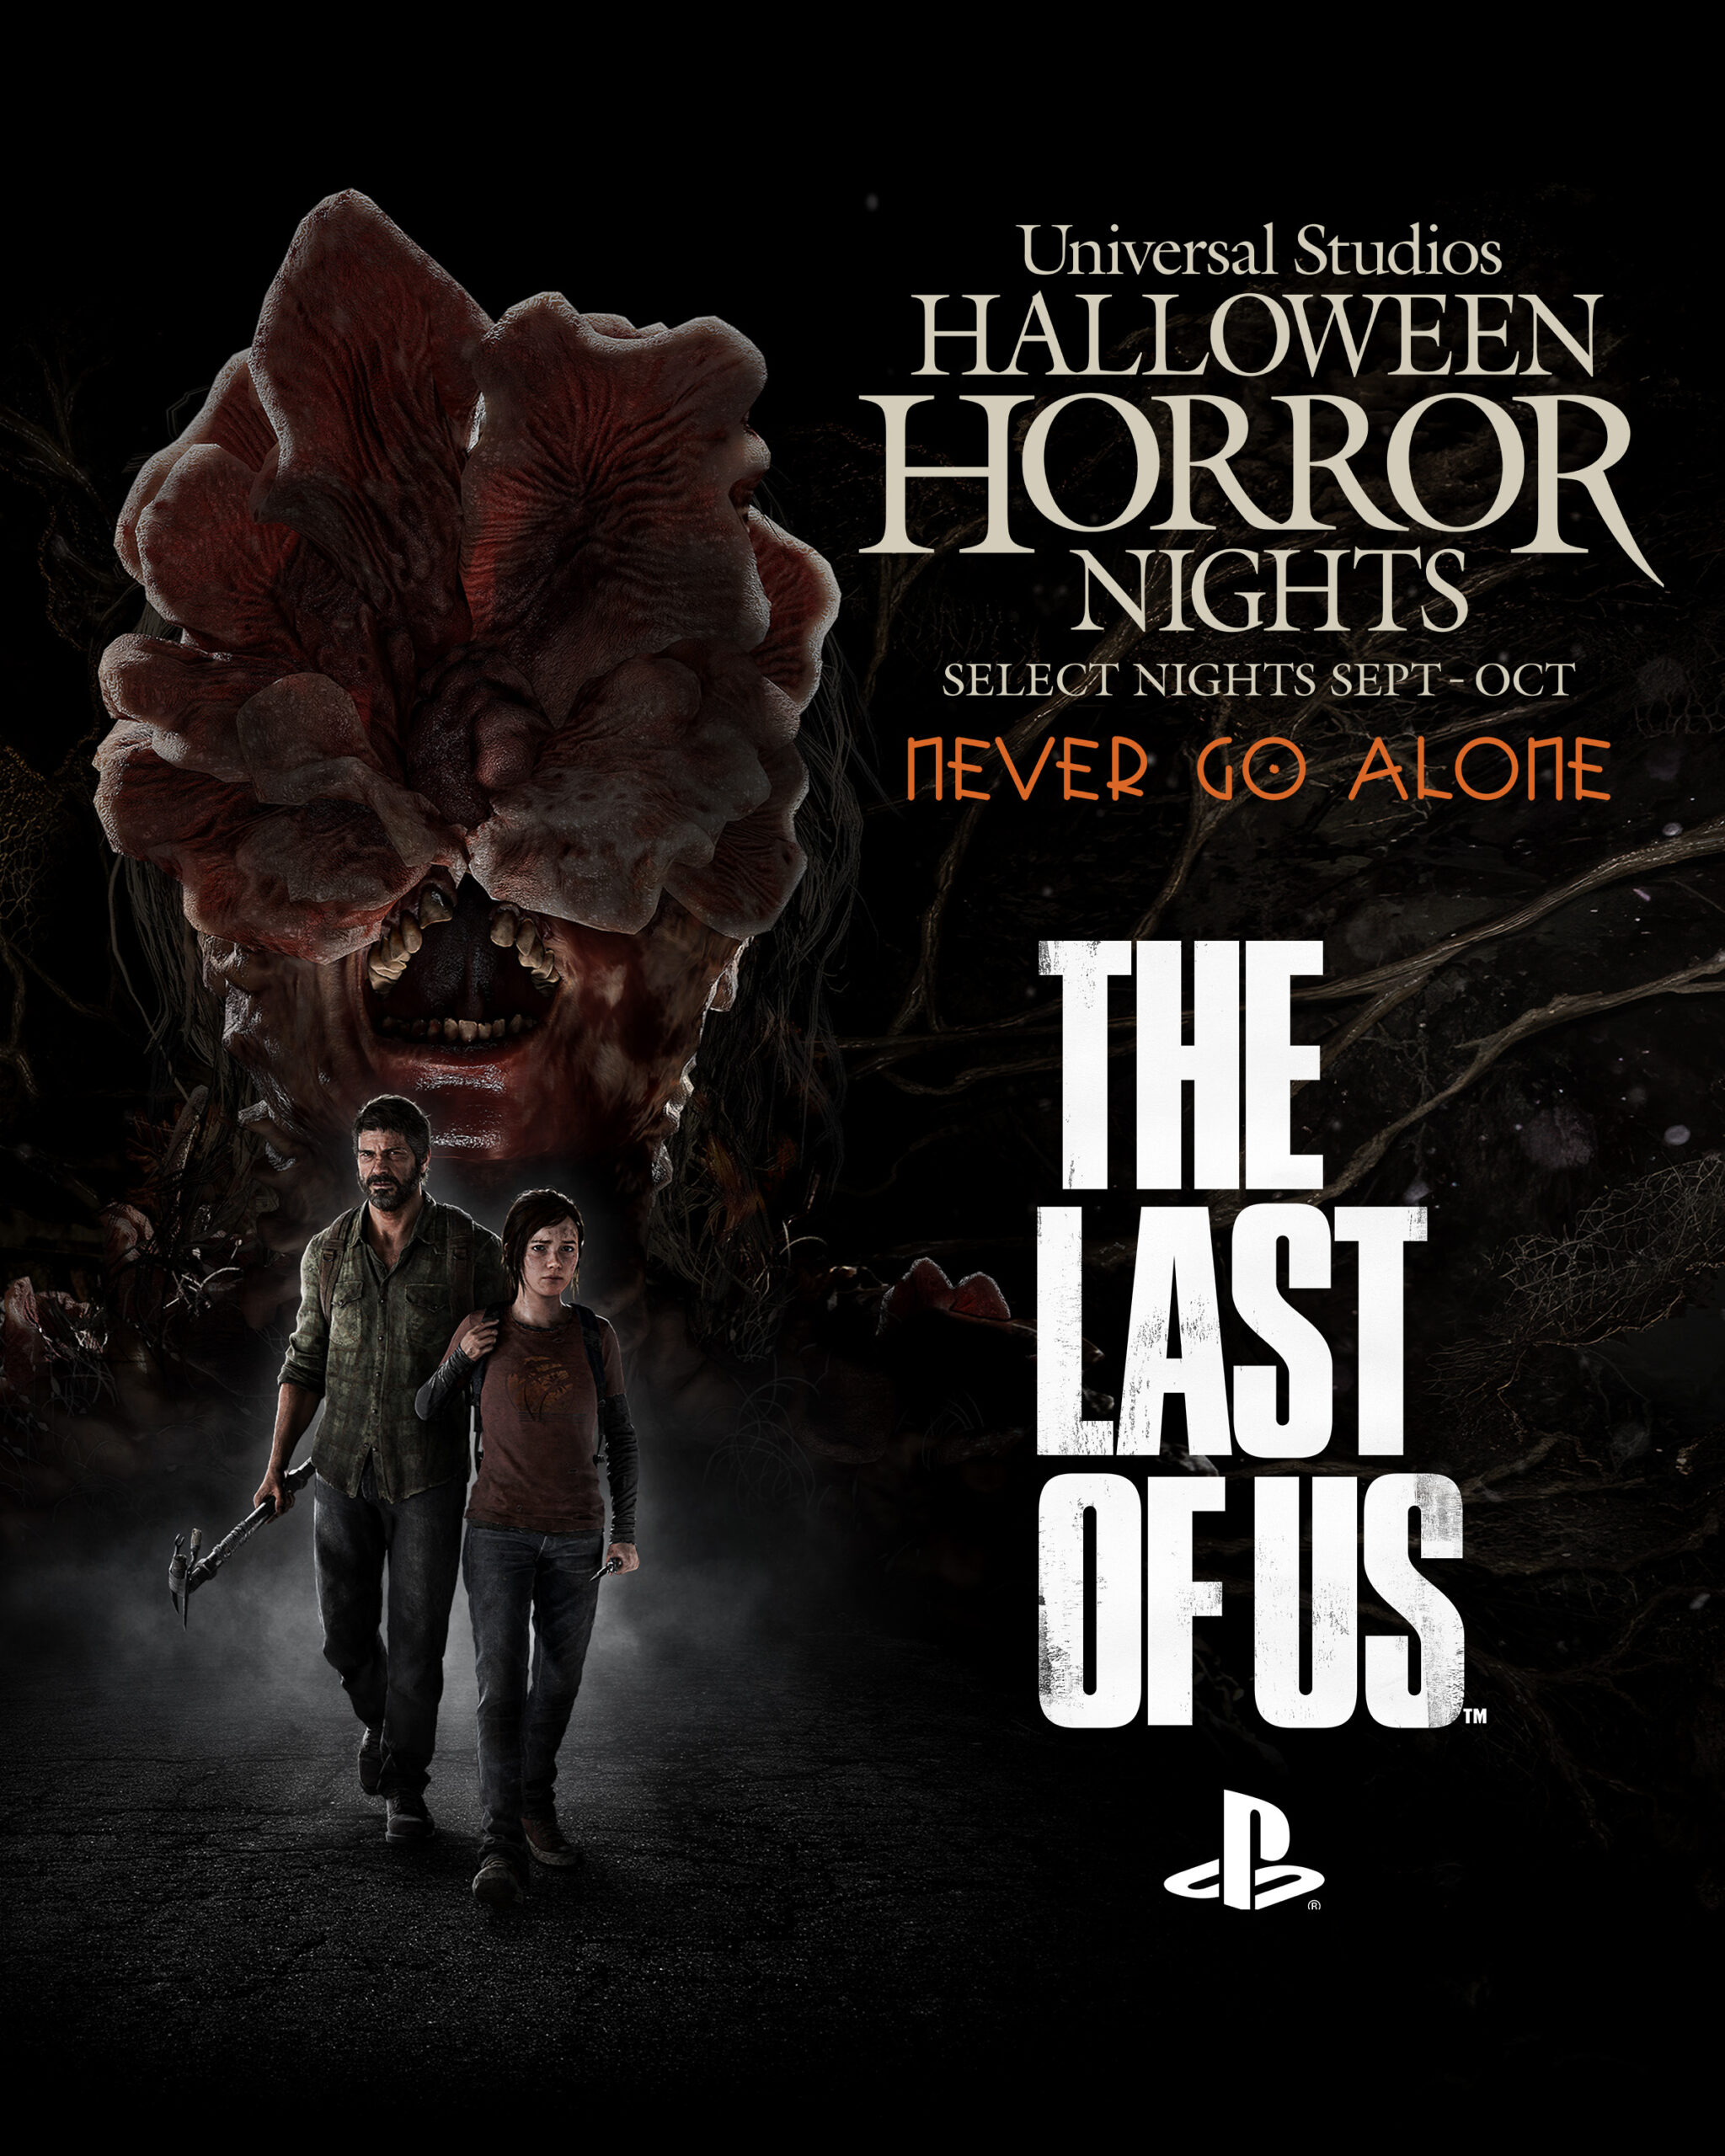 Universal Studios’ Halloween Horror Nights dares guests to survive “The Last of Us” « Amusement 